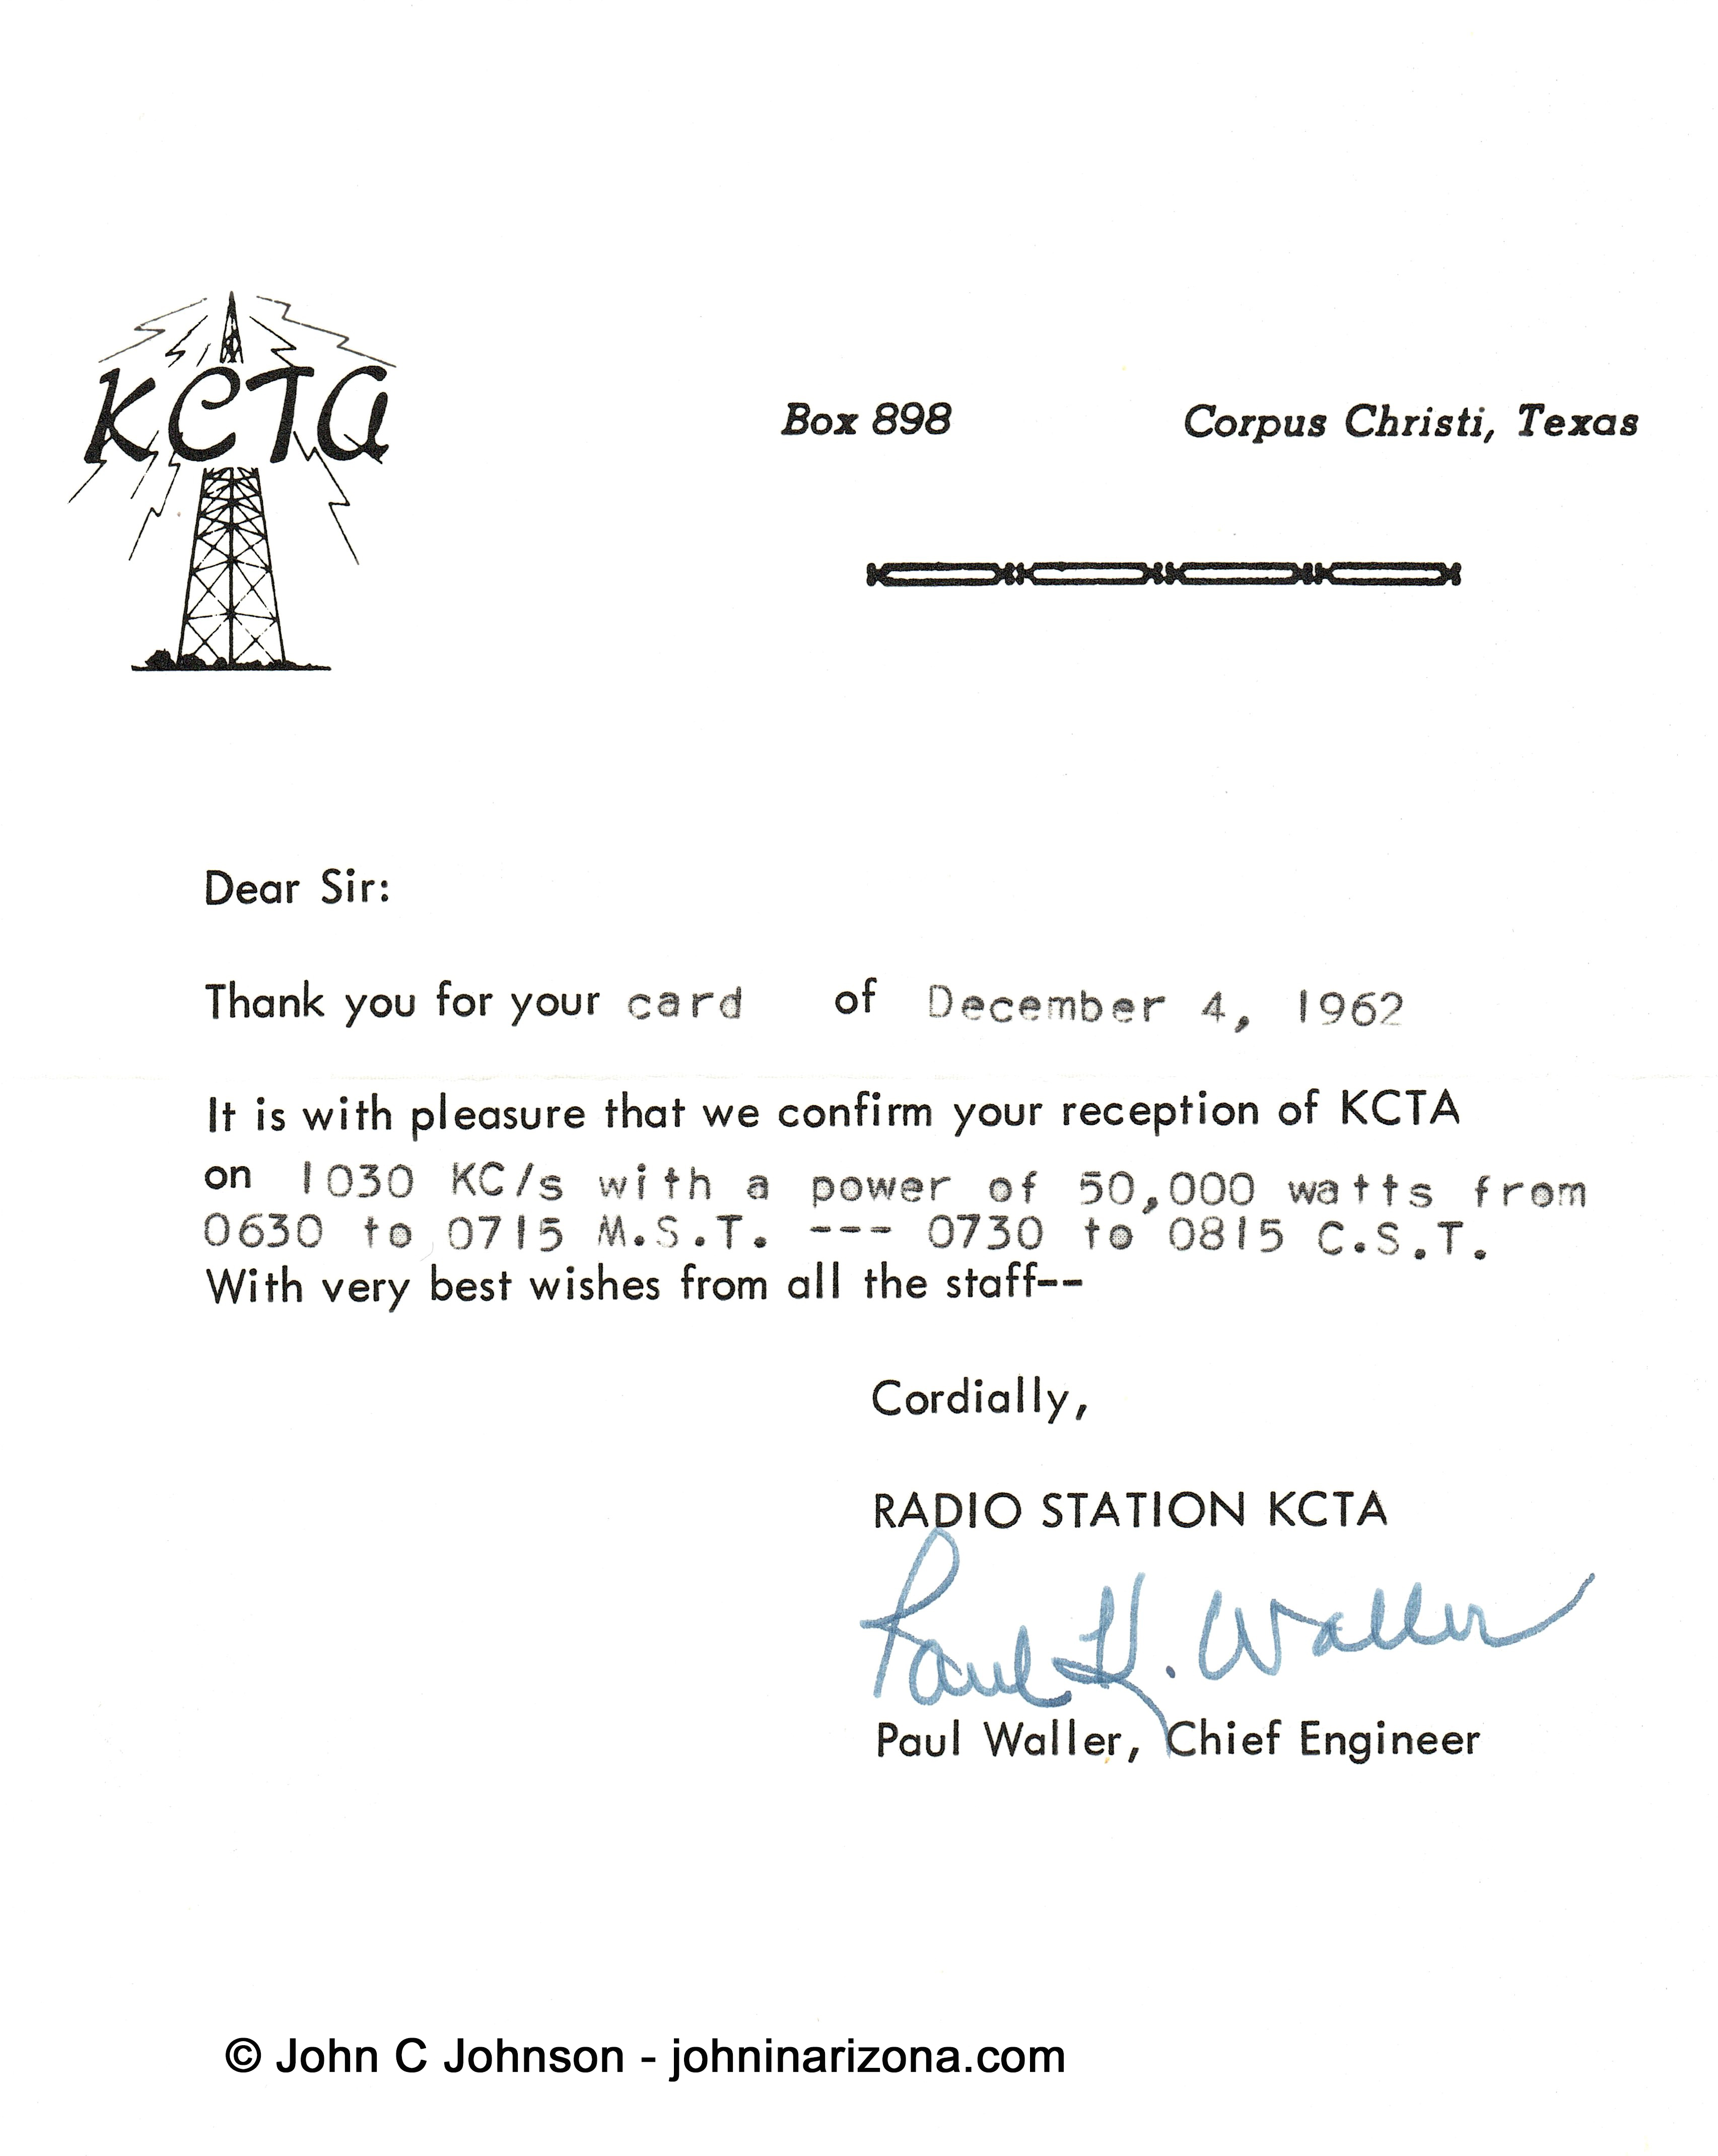 KCTA Radio 1030 Corpus Christi, Texas